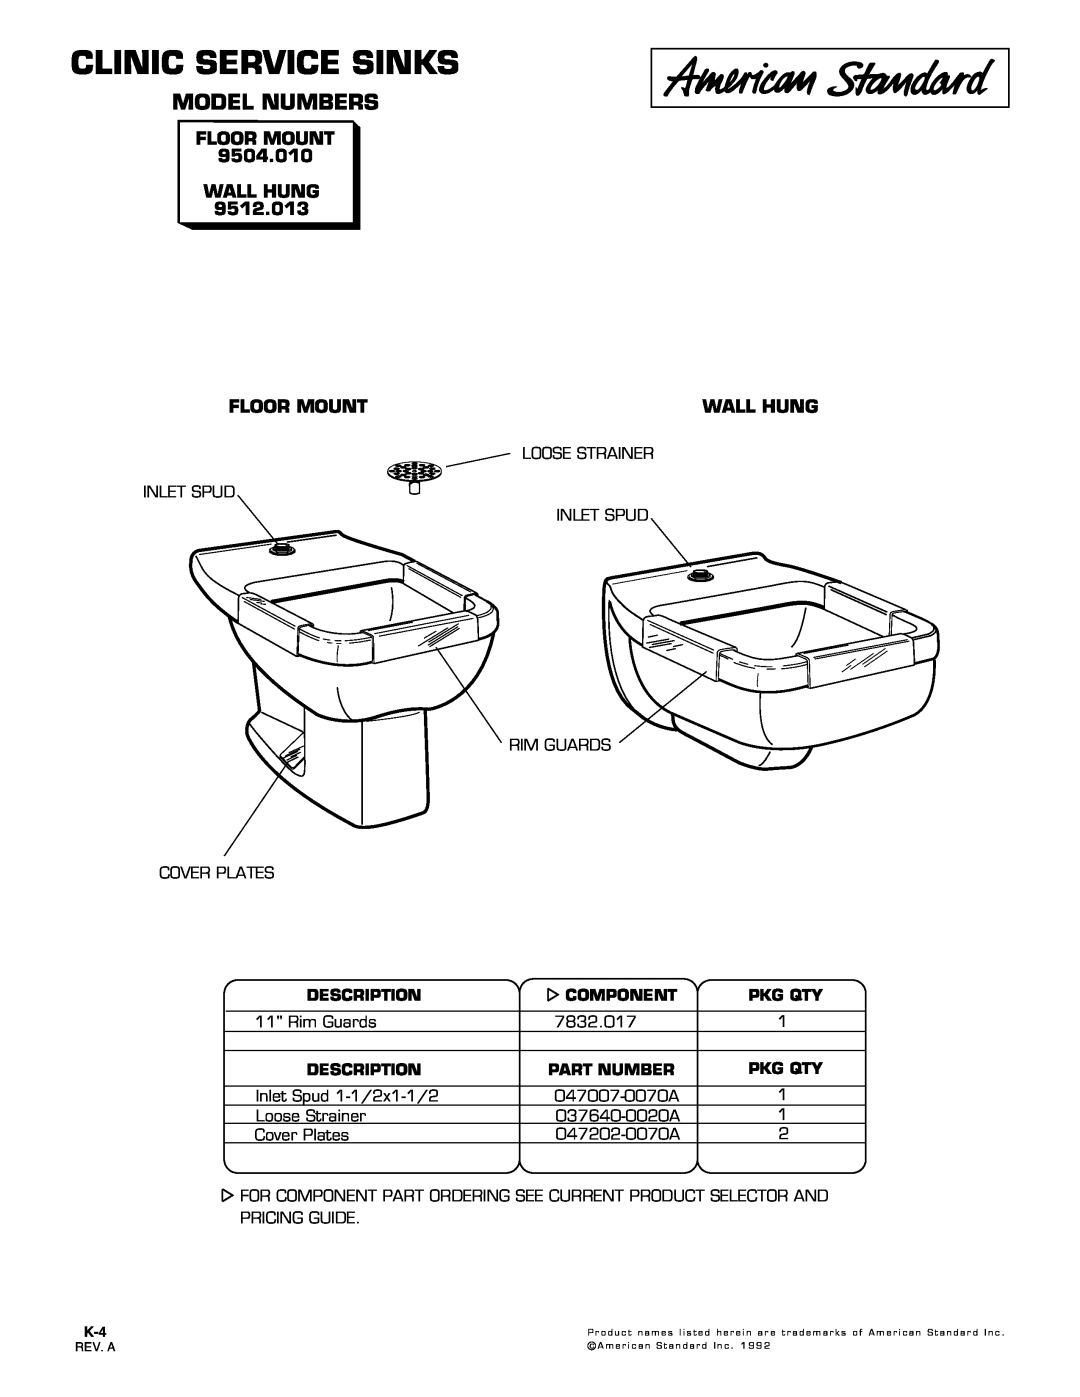 American Standard 9512.013 manual Clinic Service Sinks, Model Numbers, FLOOR MOUNT 9504.010 WALL HUNG, Floor Mount 